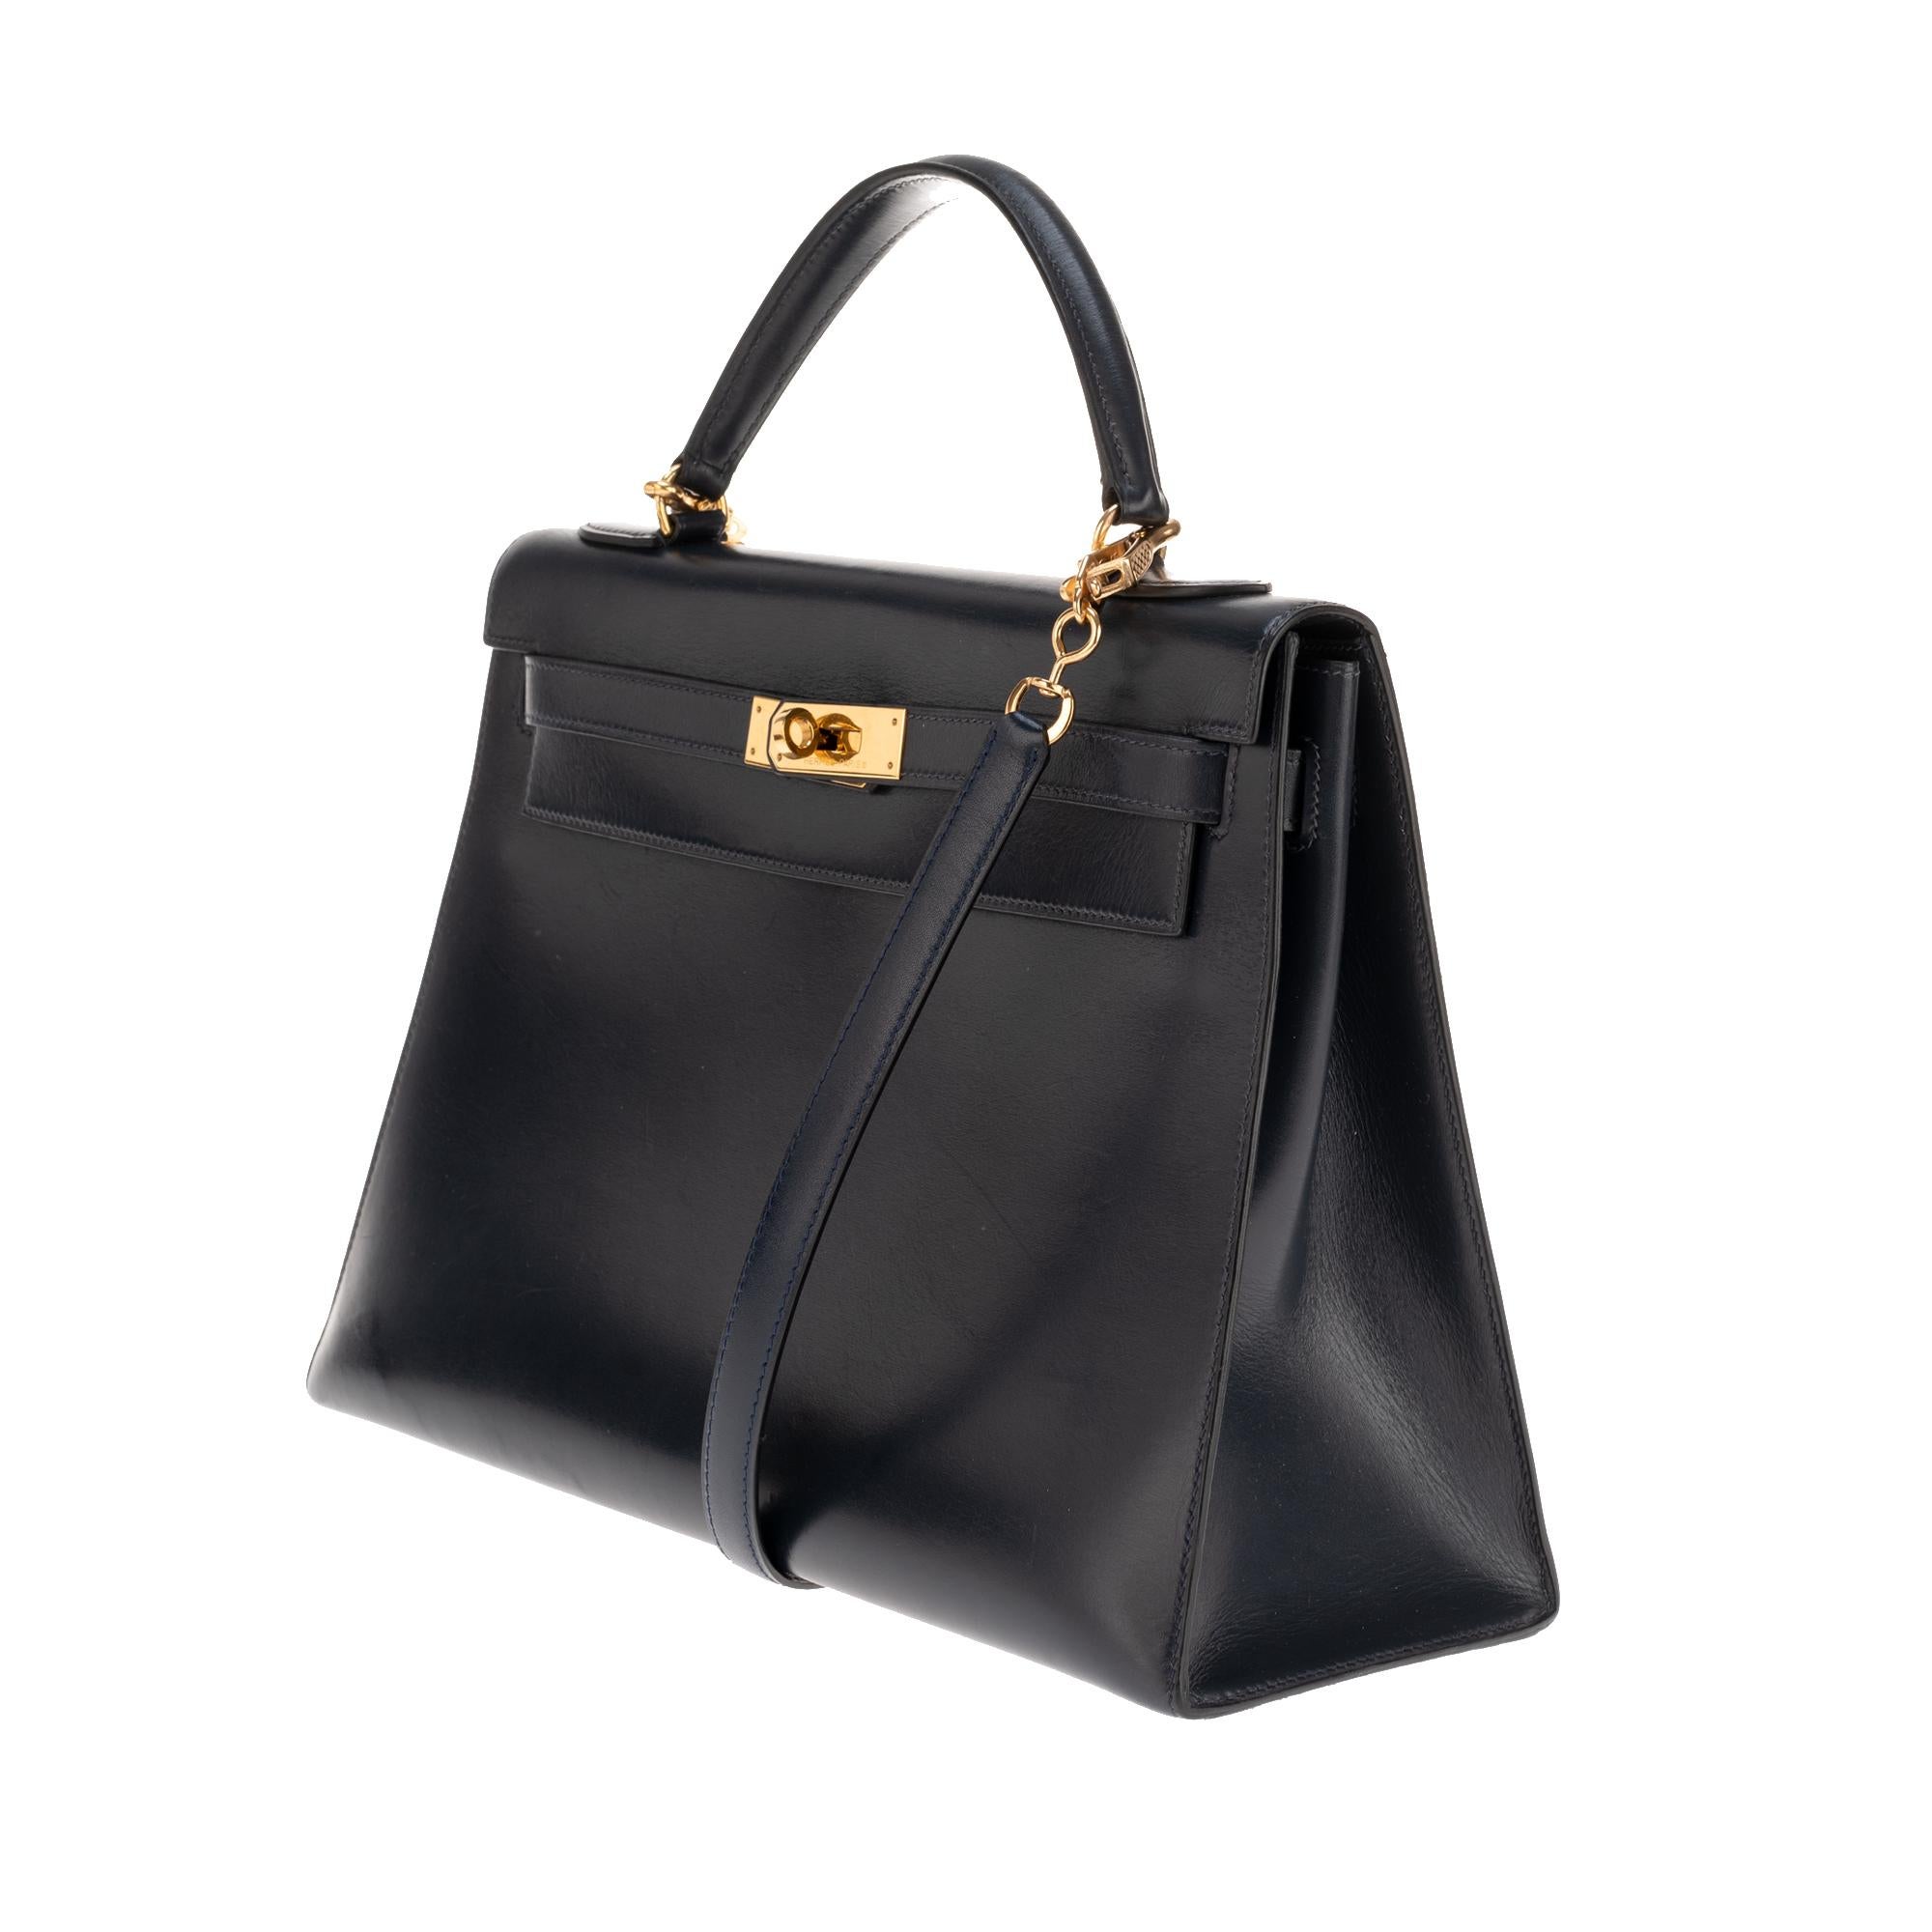 Women's Handbag Hermès Kelly sellier 32 in calfskin blue navy with strap, gold hardware!